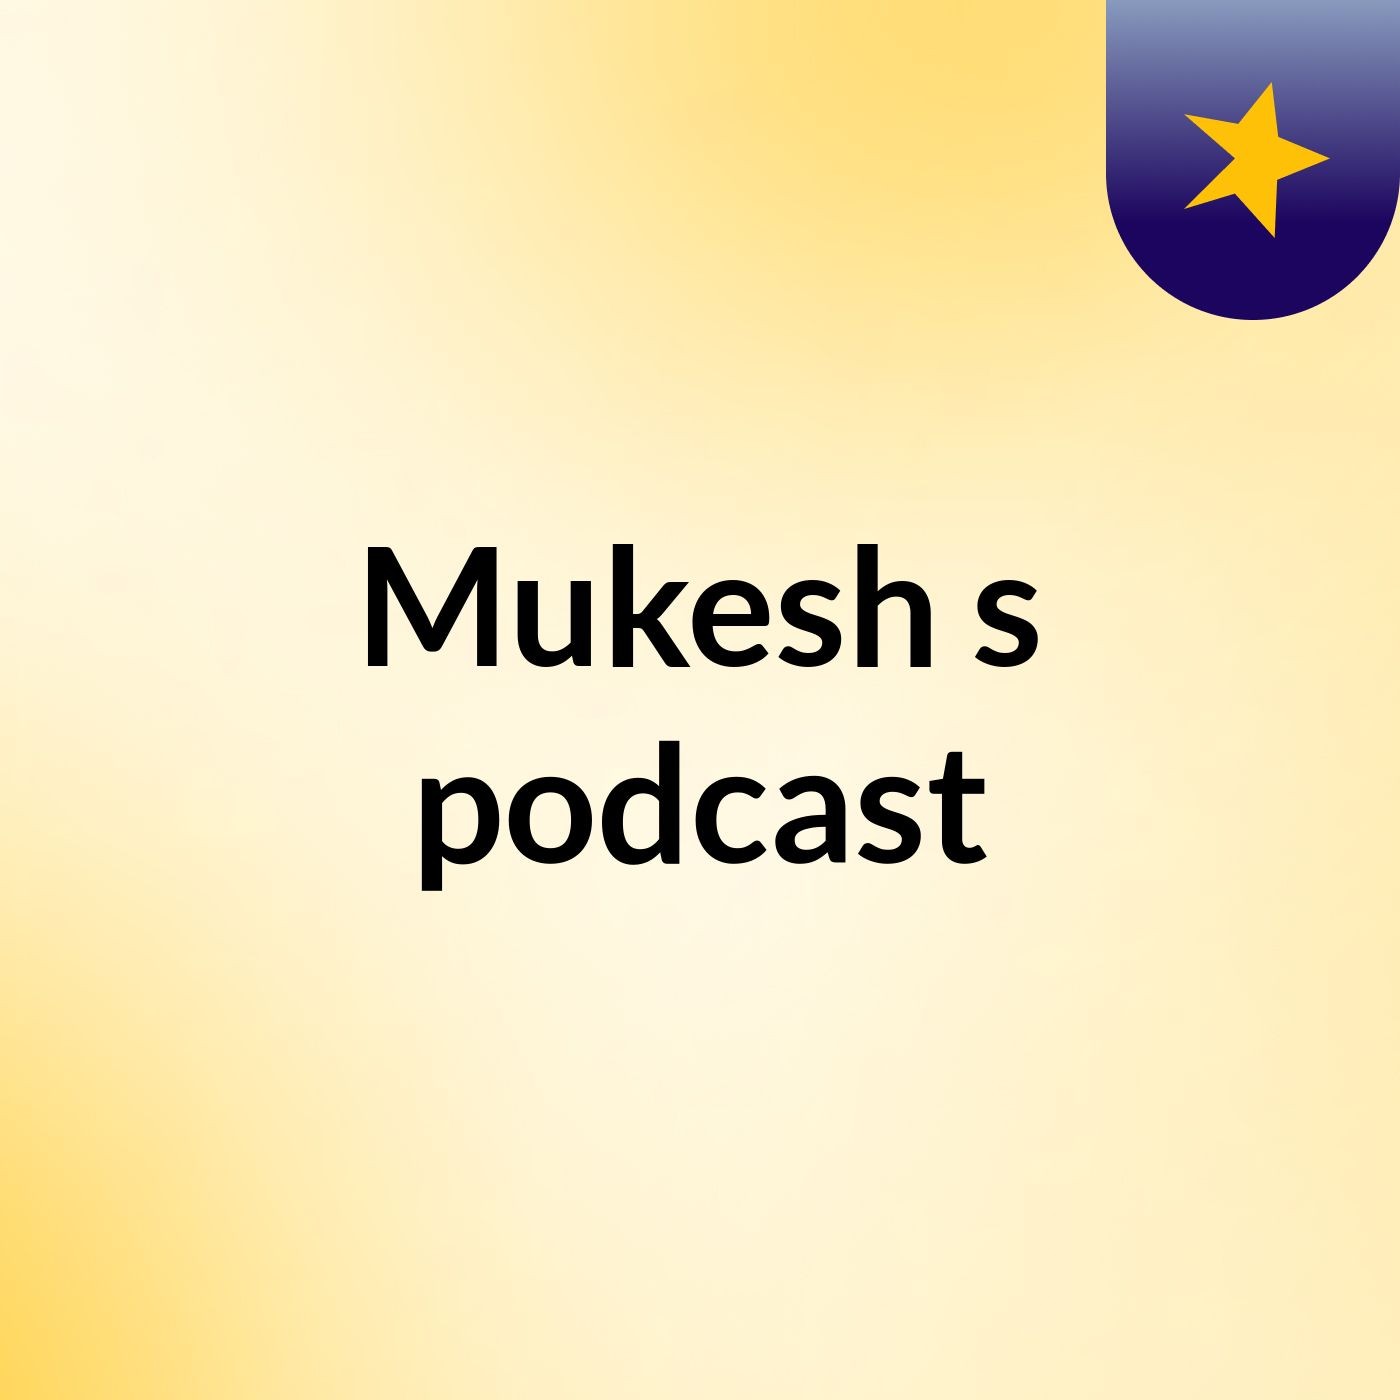 Mukesh's podcast